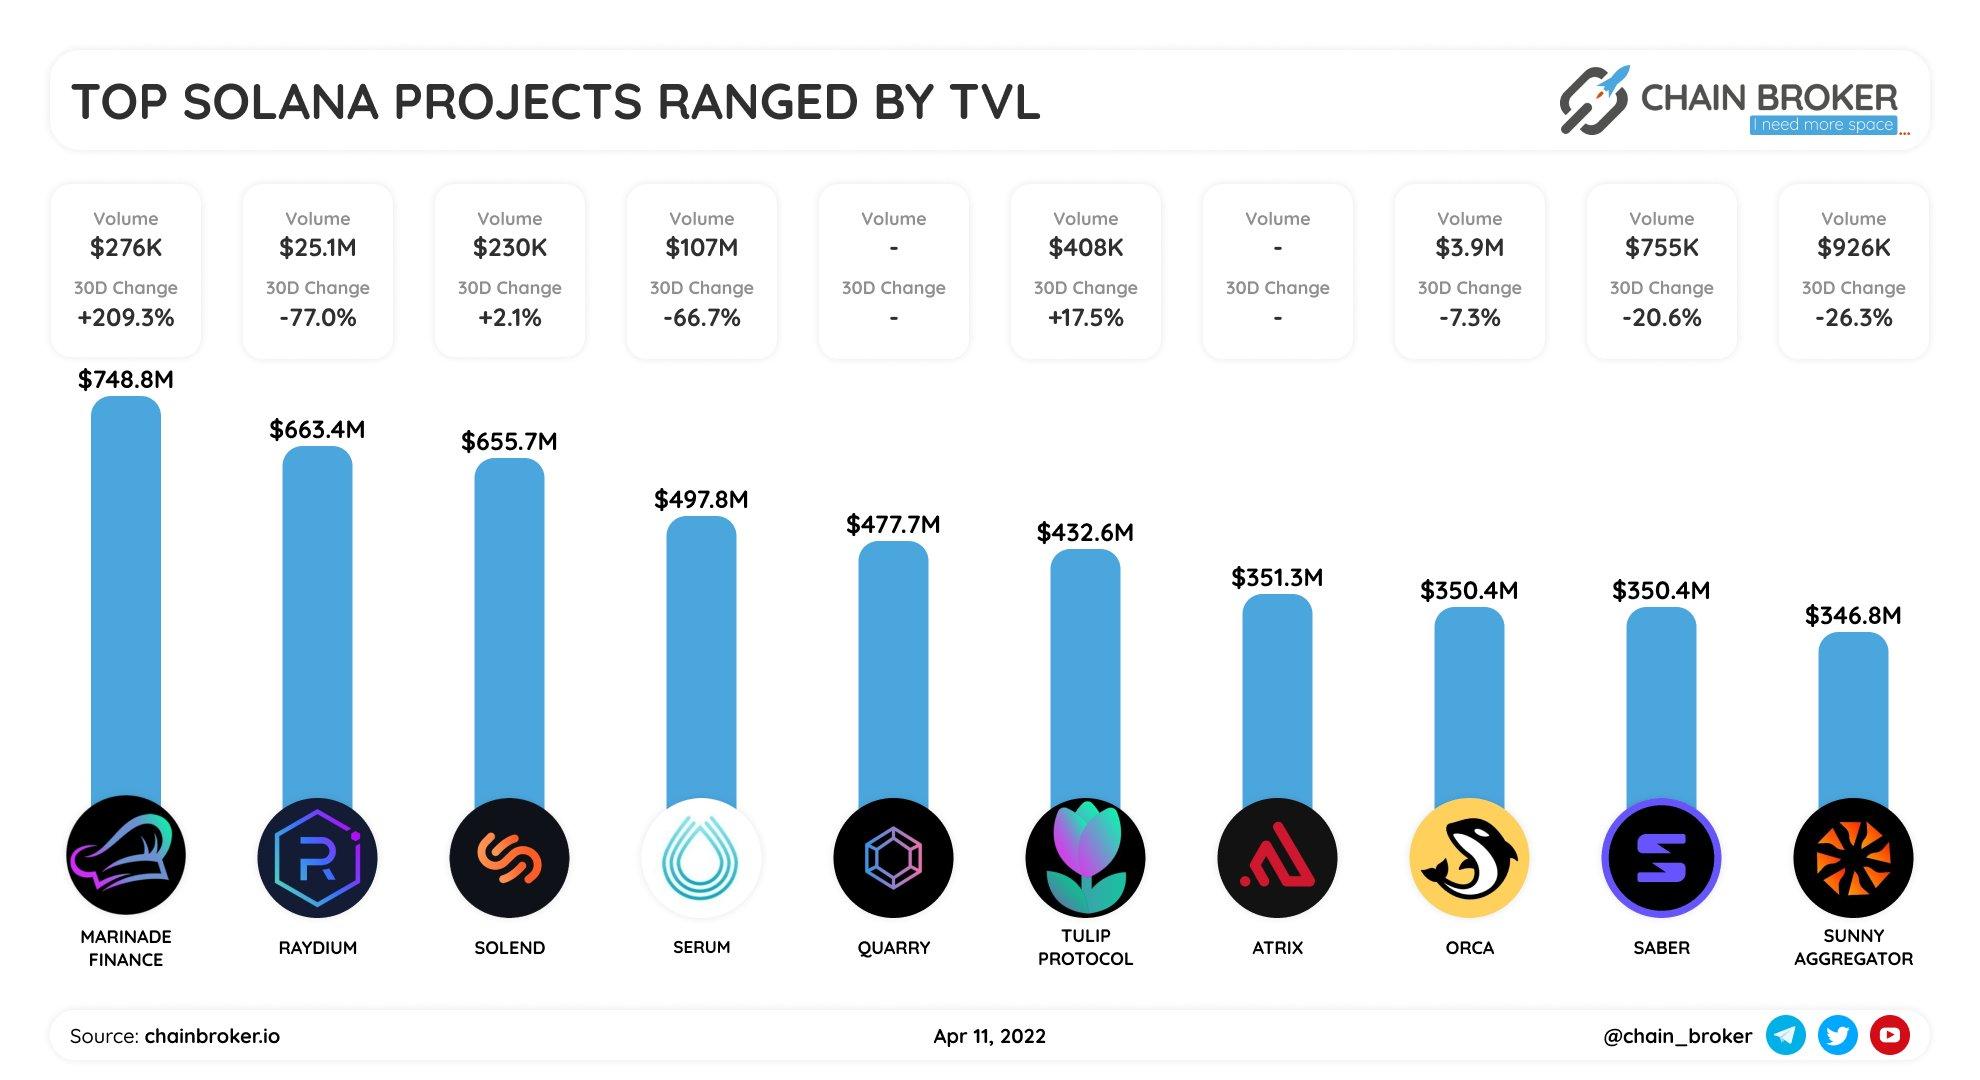 Top Solana projects ranged by TVL